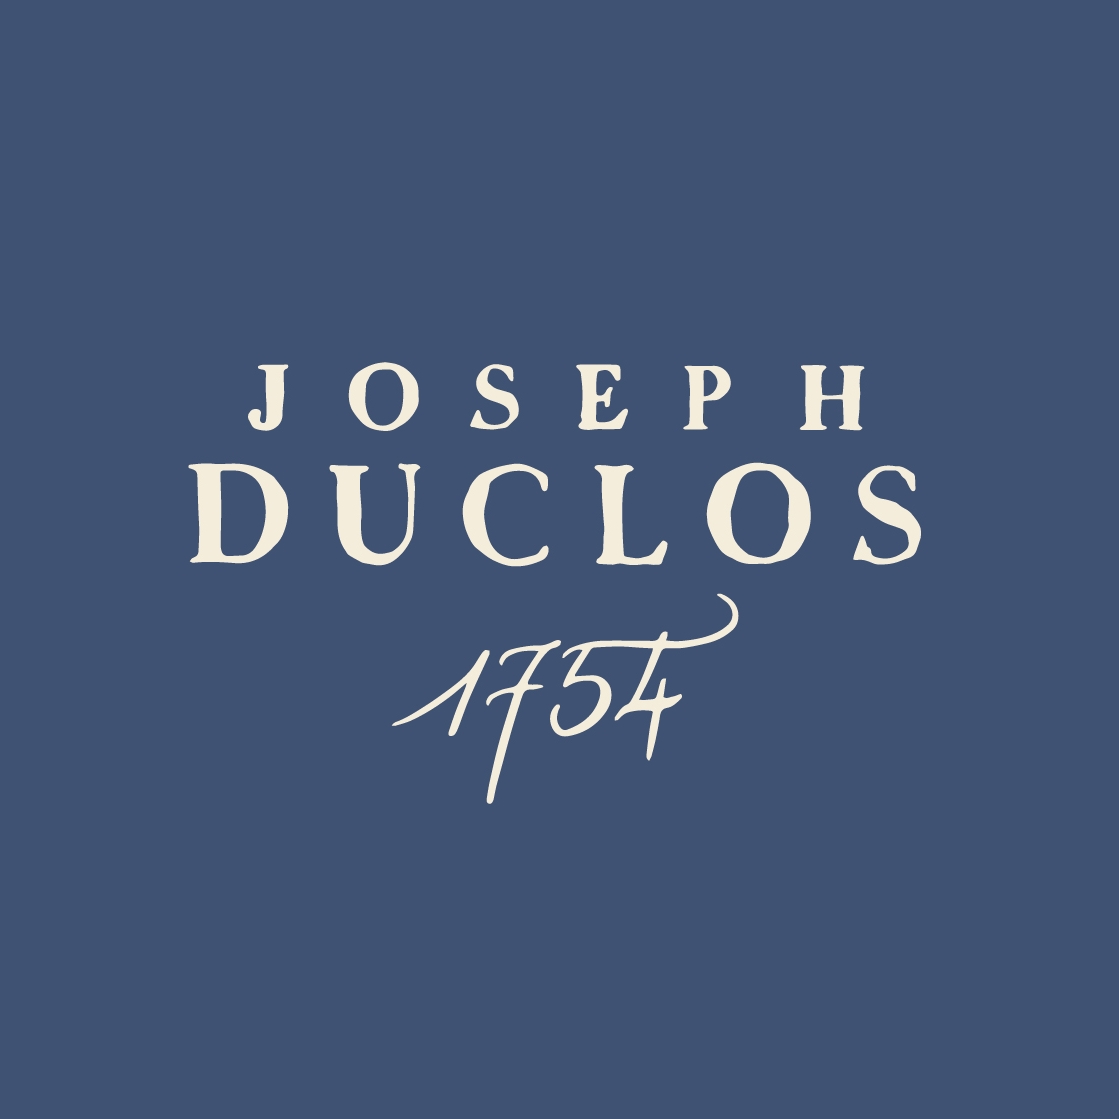 Joseph Duclos